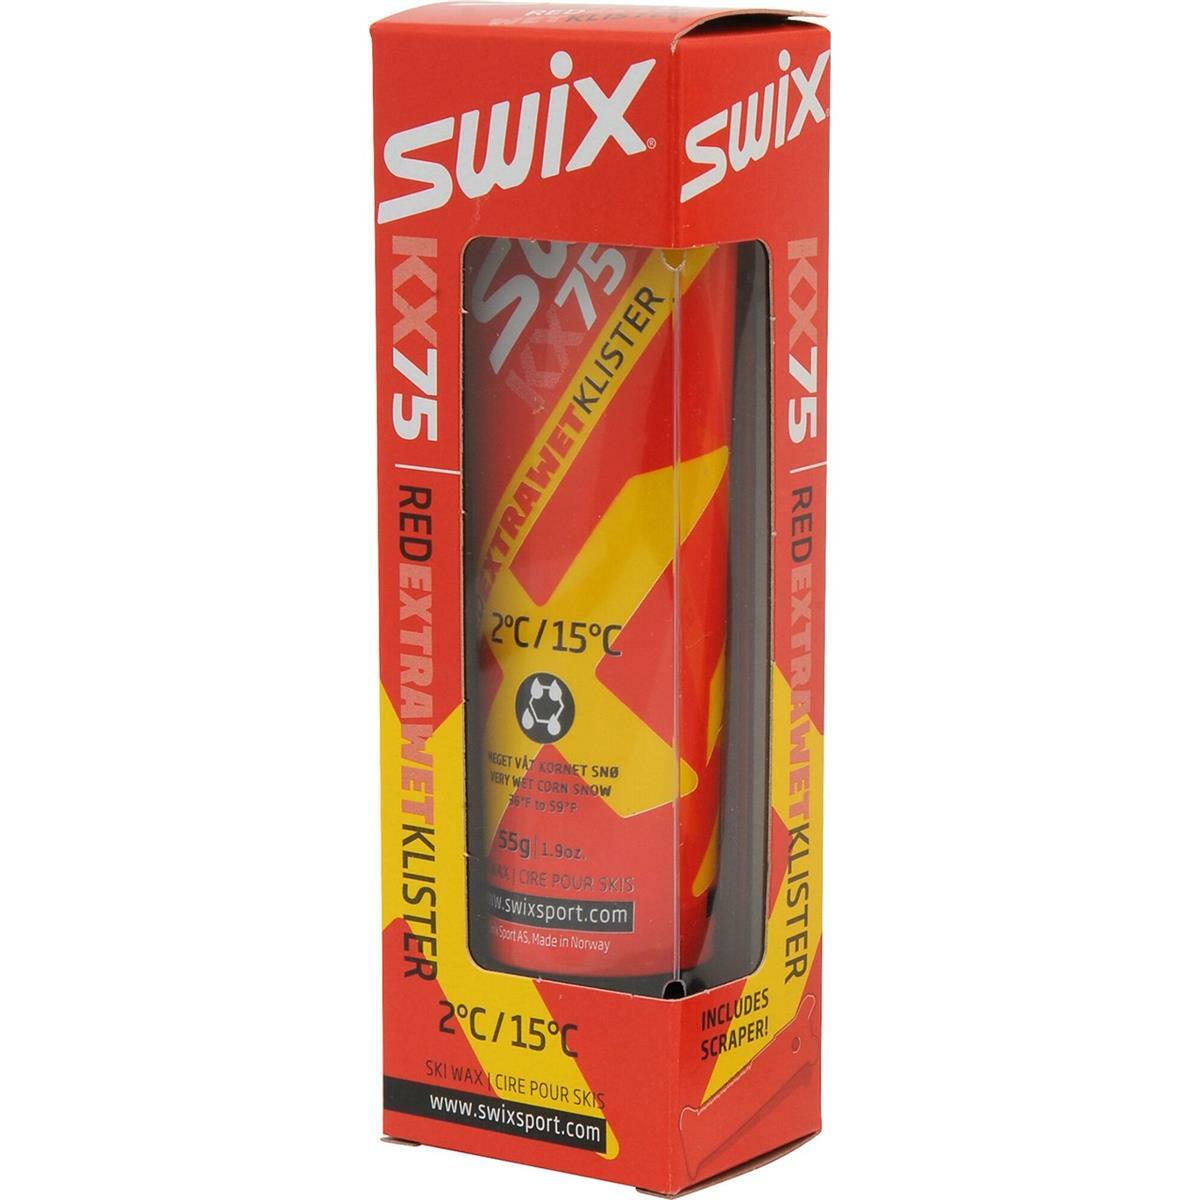 Swix KX75 Red Extra Wet Klister +2°C/+15°C, 55g